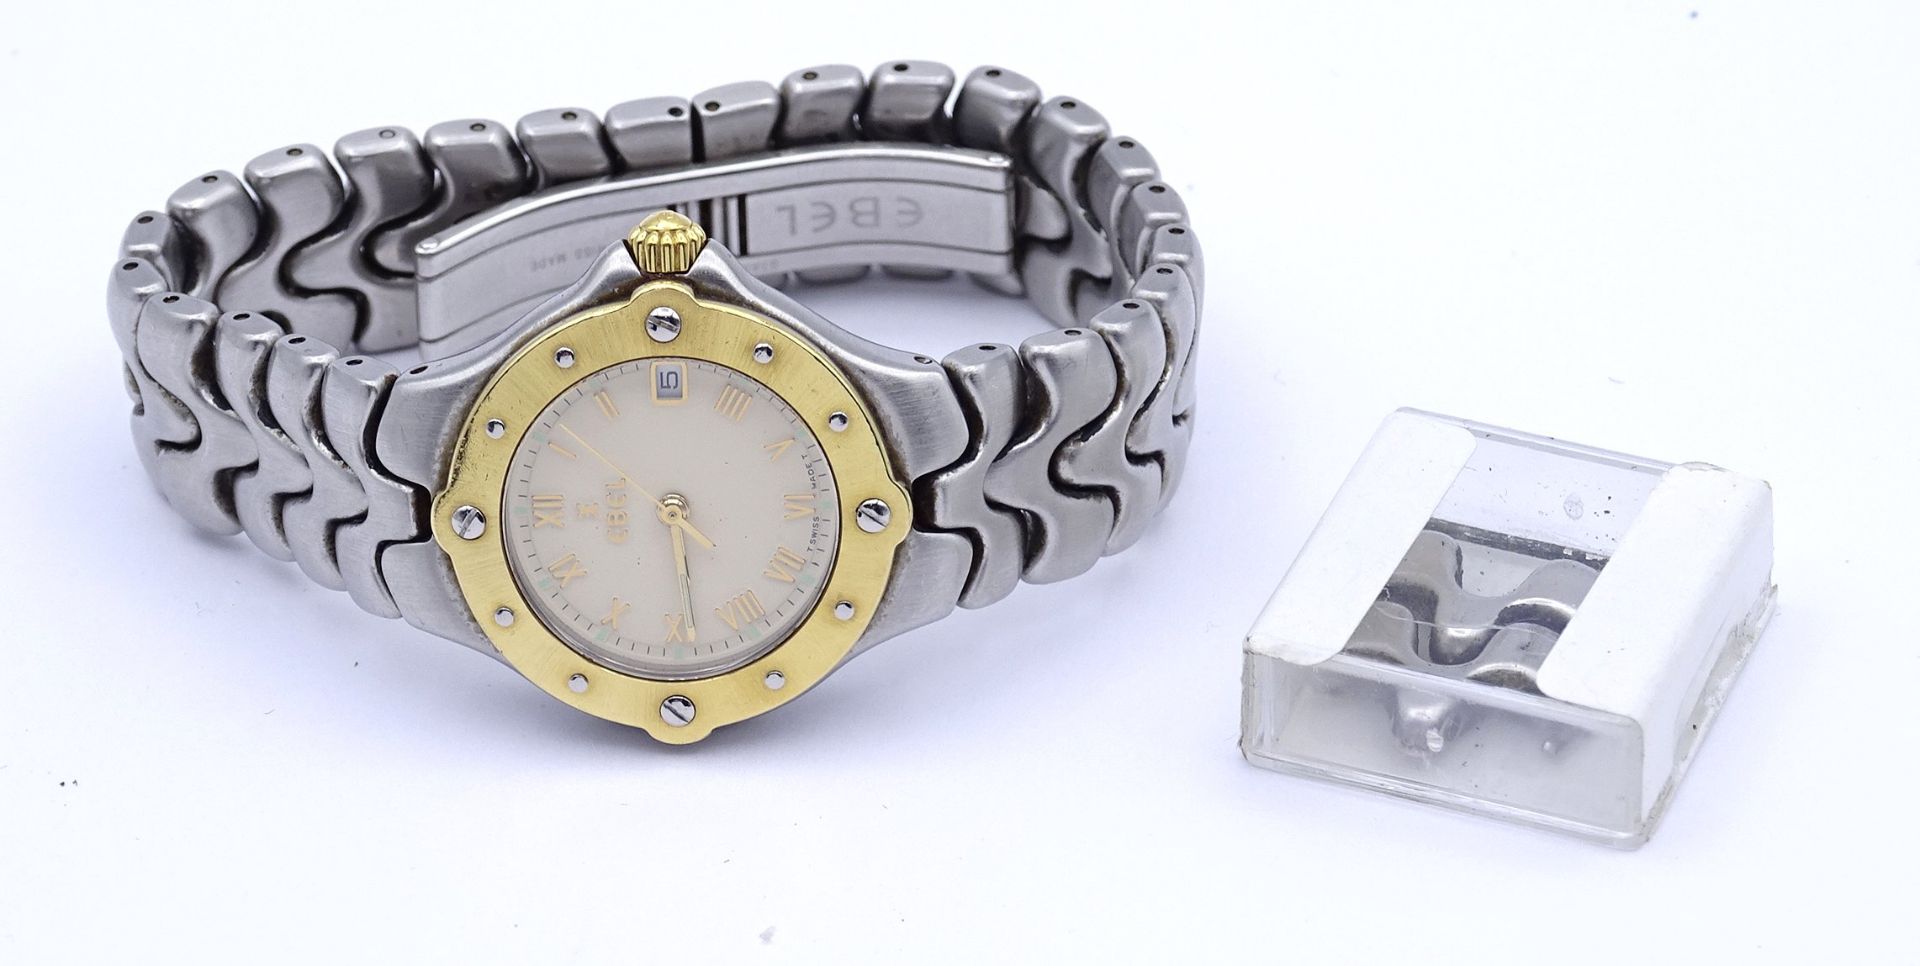 Damen Armbanduhr EBEL SPORTWAVE , Stahl / Gelbgold, Quartz, D. 26mm, Funktion nicht überprüft